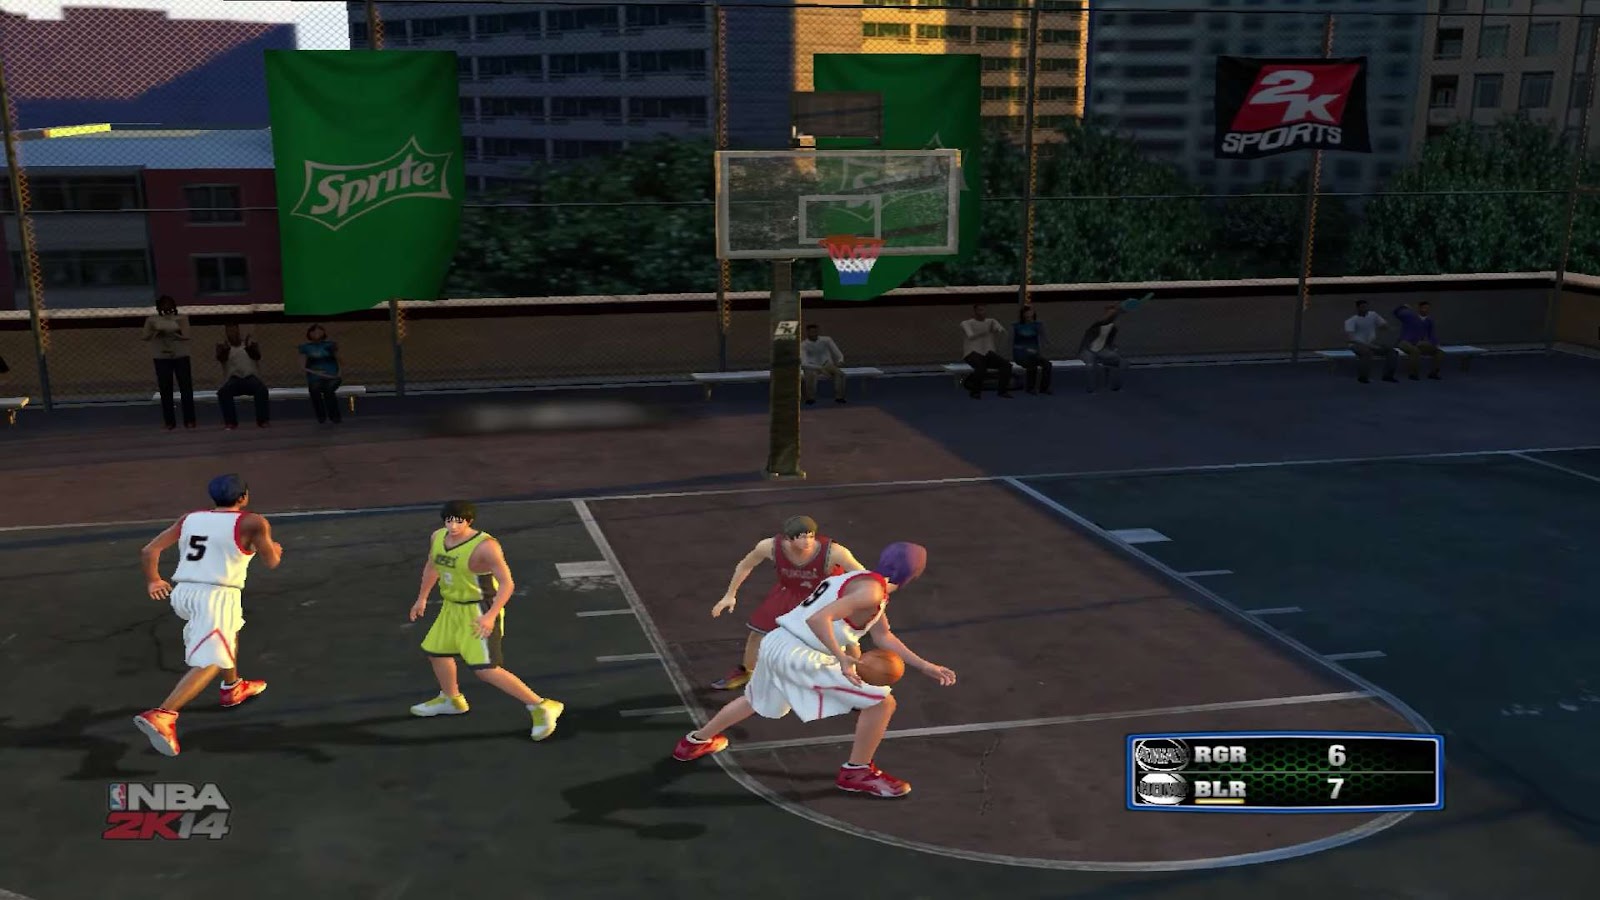 Part of NBA 2K14 game